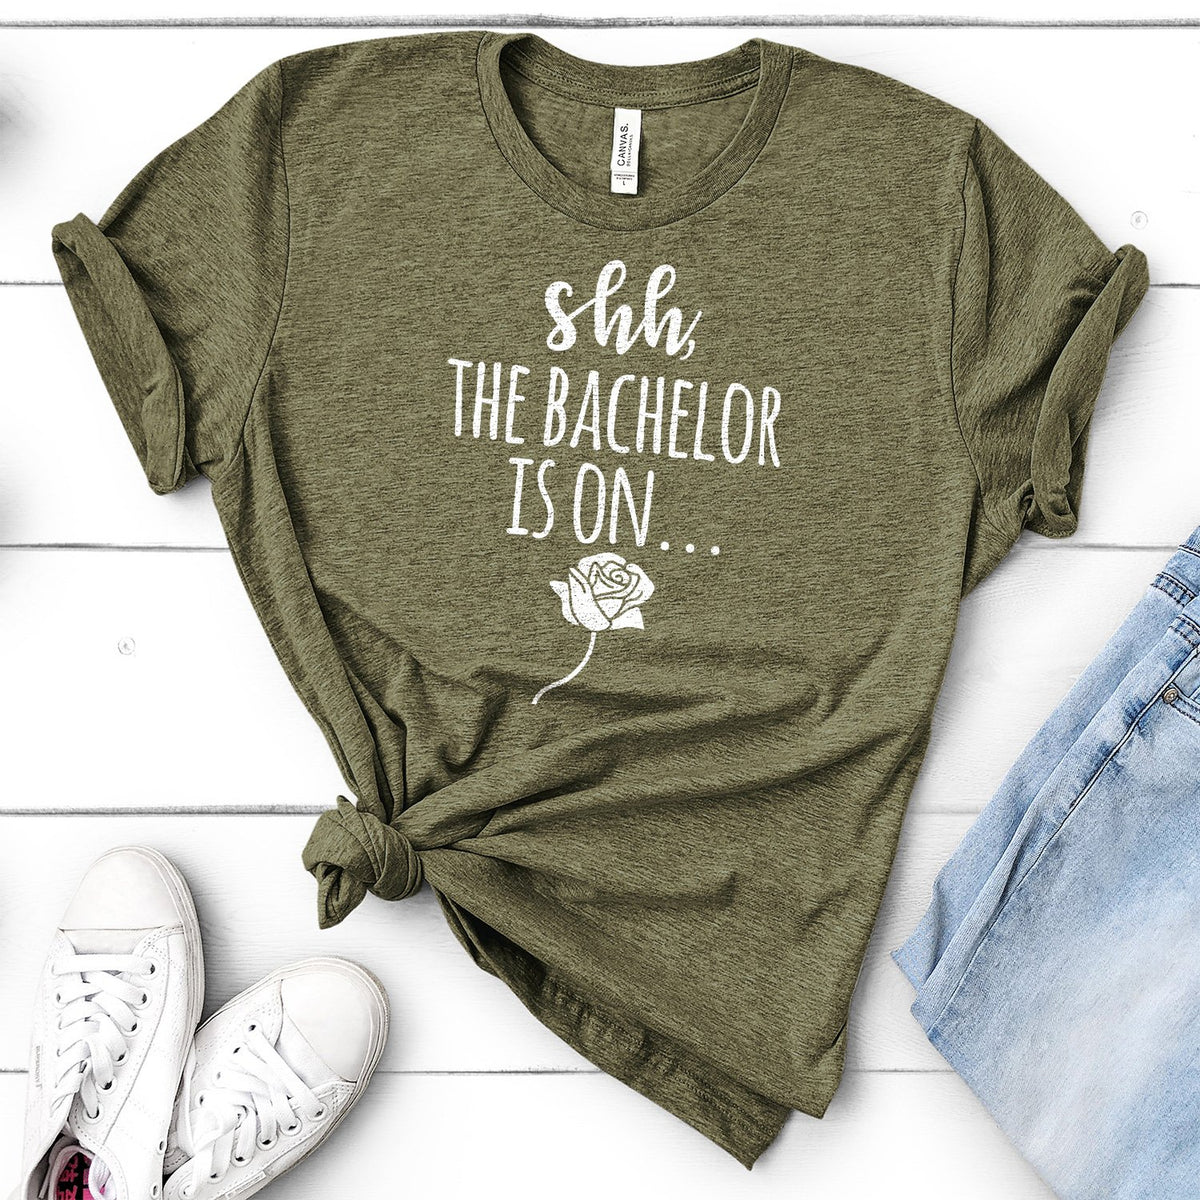 Shh The Bachelor is On - Short Sleeve Tee Shirt